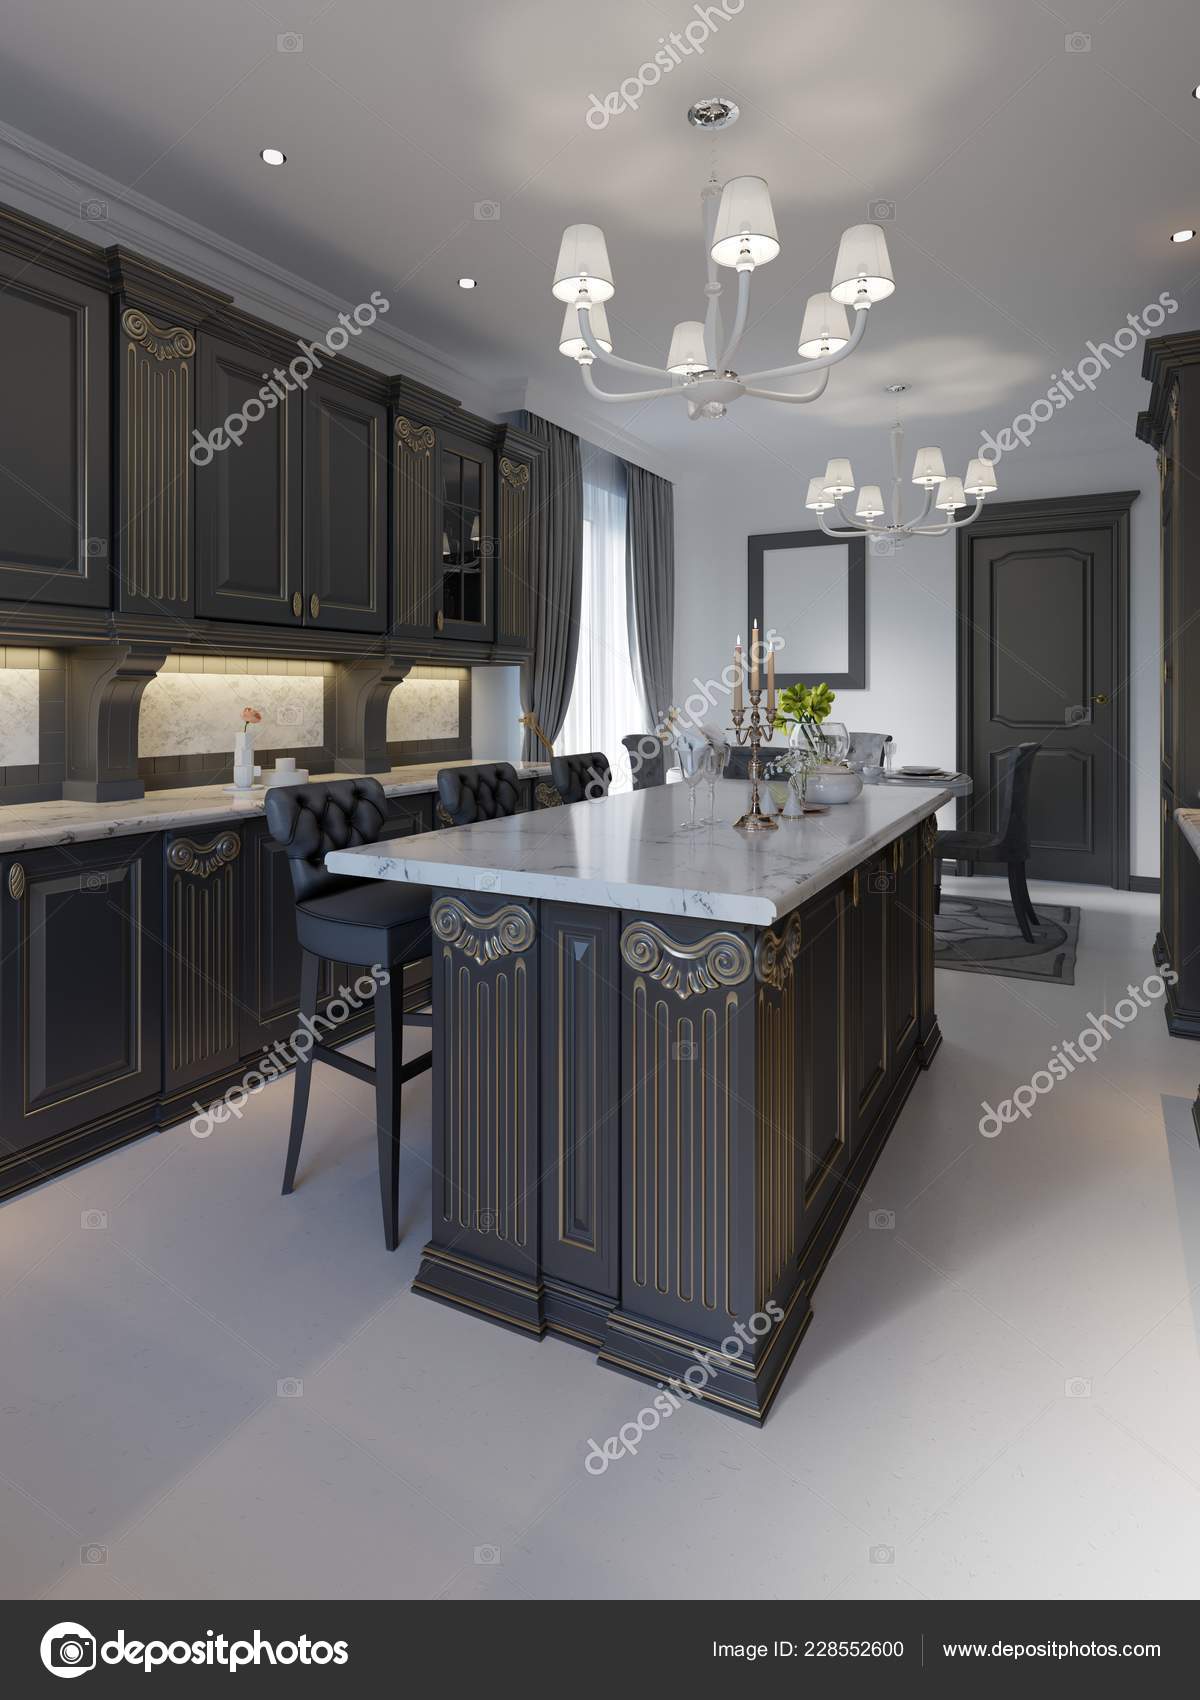 Beautiful Kitchen Luxury Home Island Pendant Lights Cabinets Self